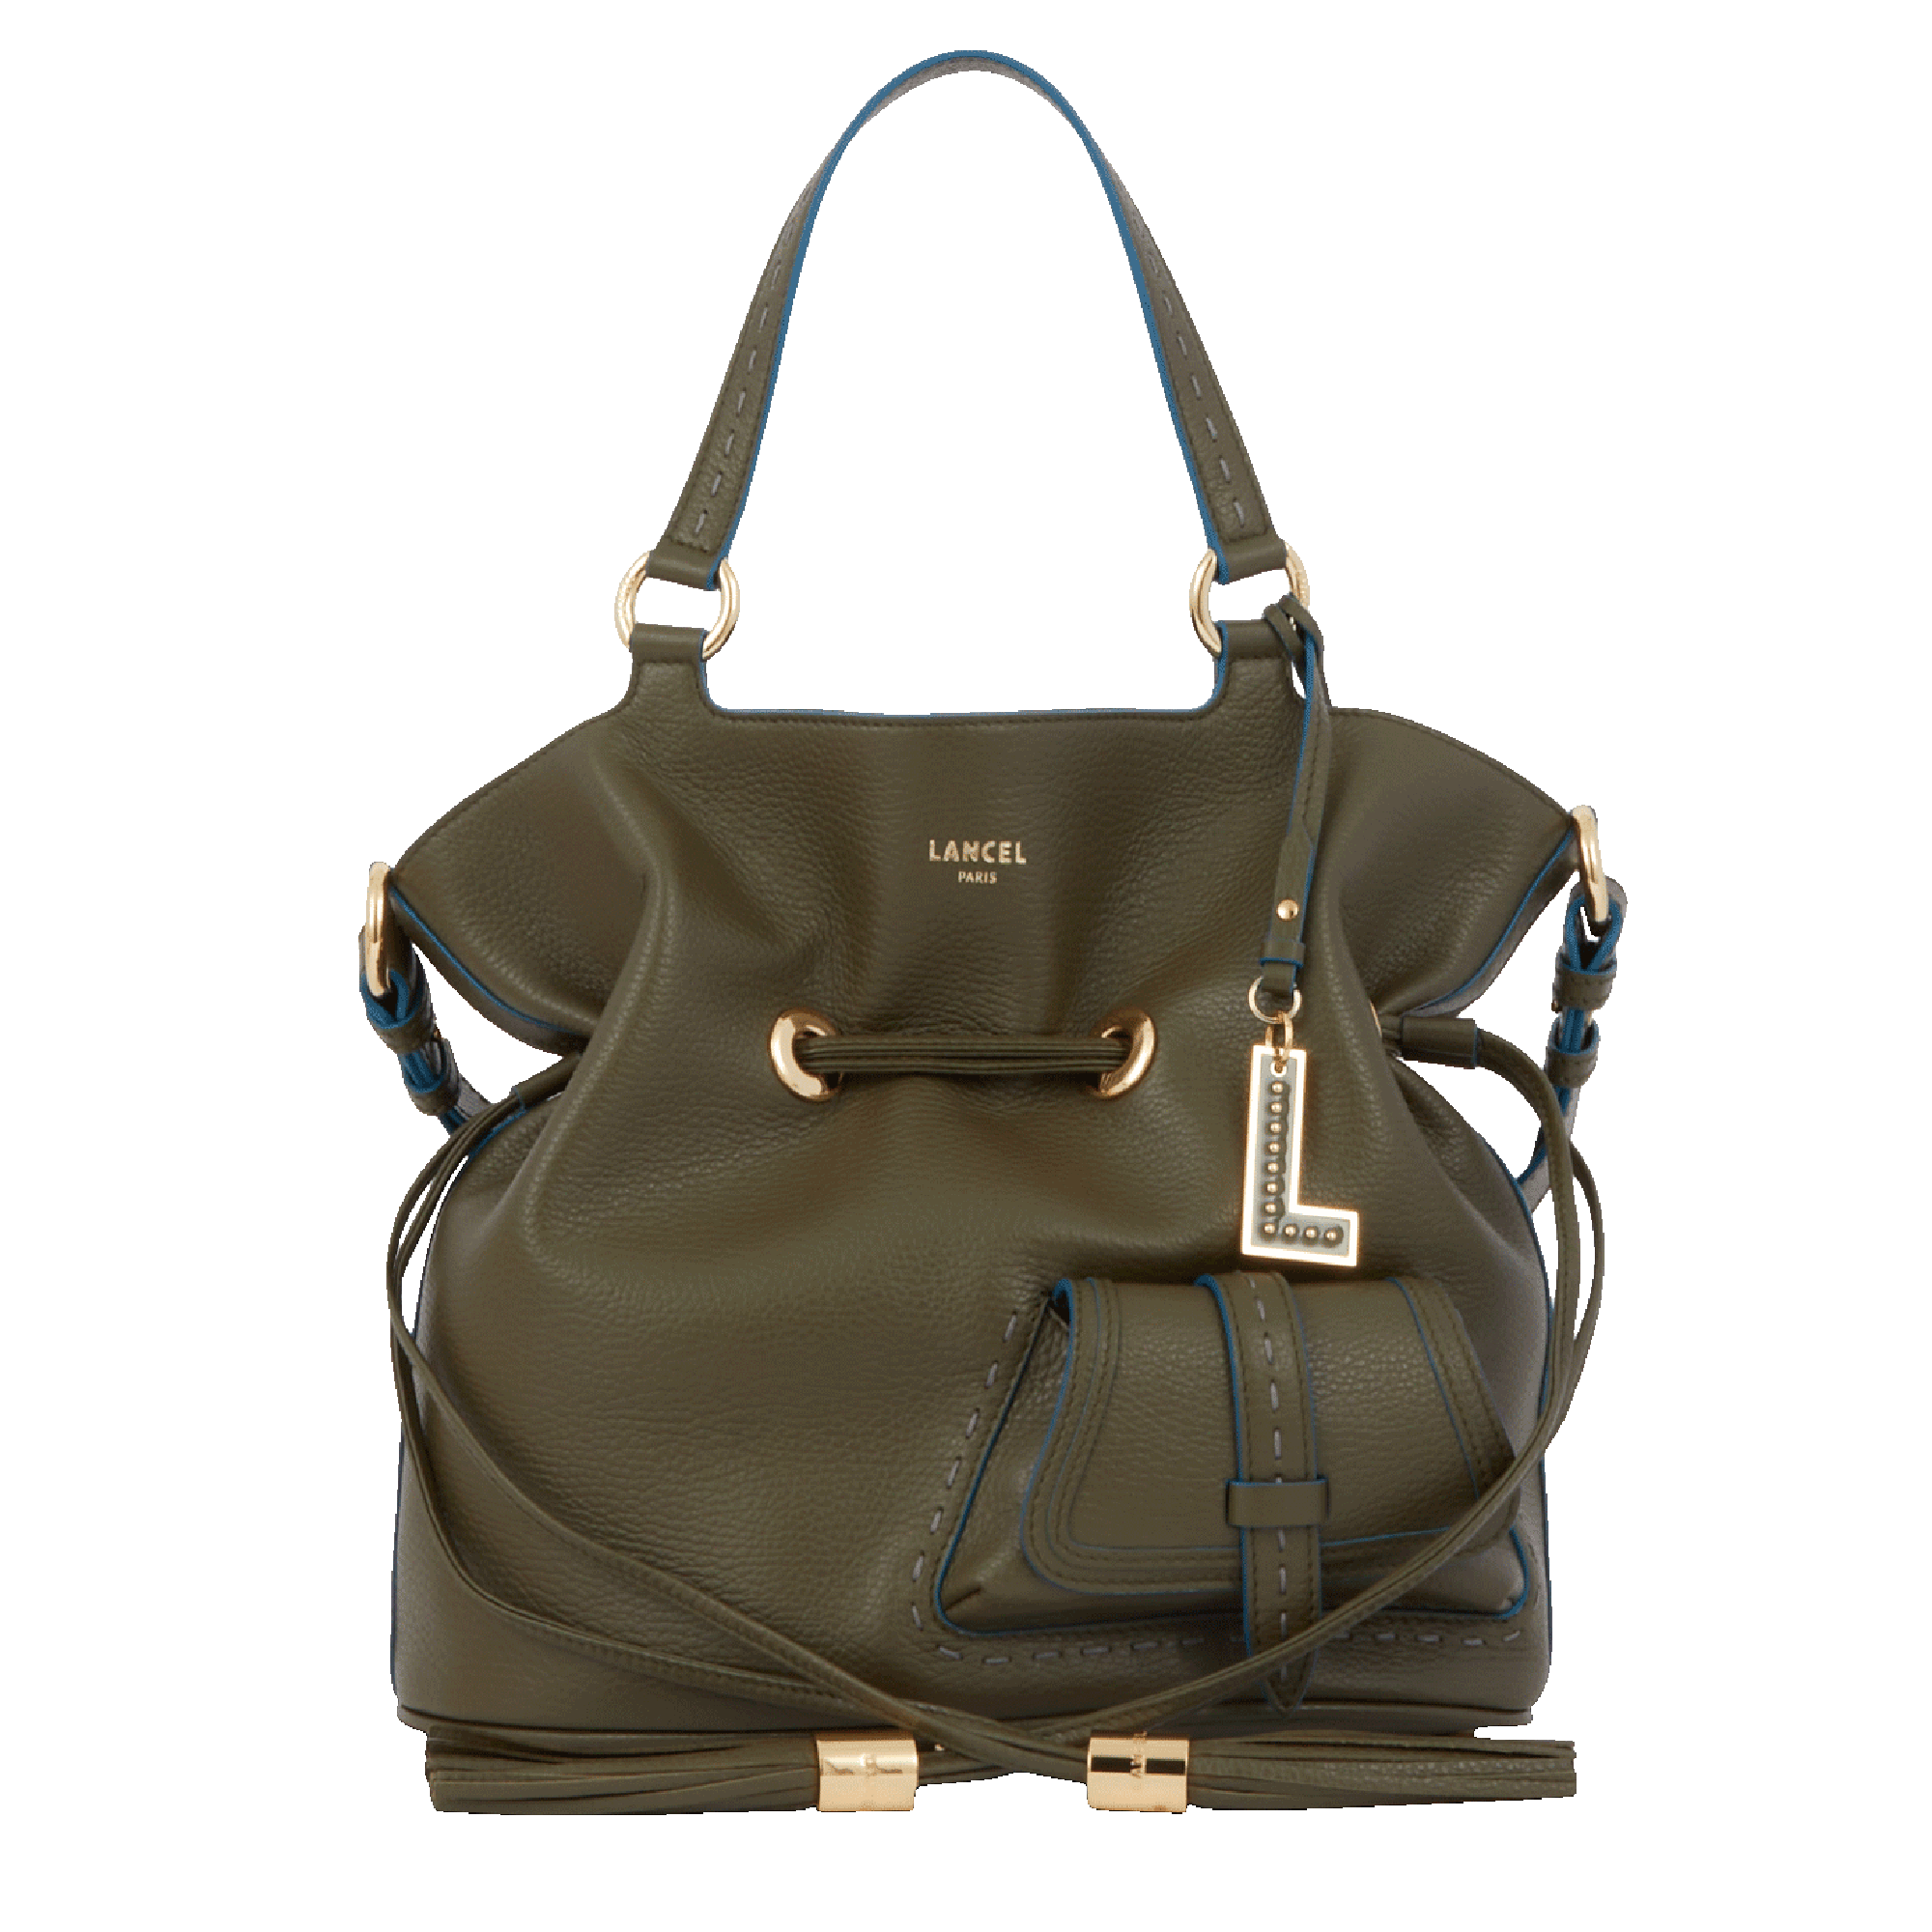 Hand bag – Lancel